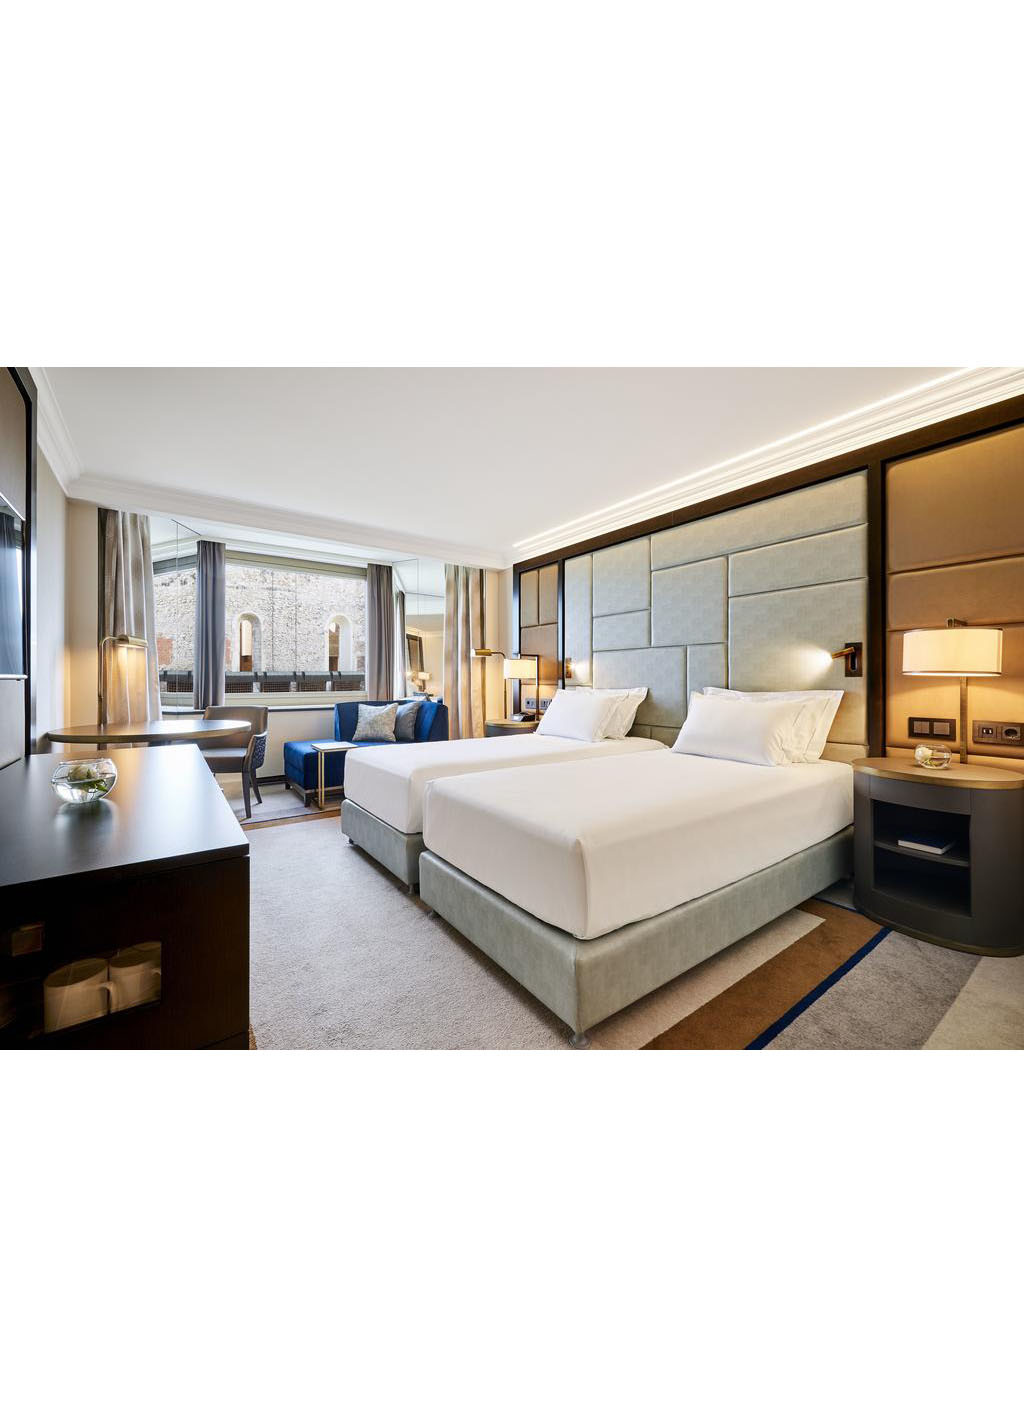 Best COC Modern Bedroom Furniture Sets / Luxury Hotel Bedroom Furniture wholesale